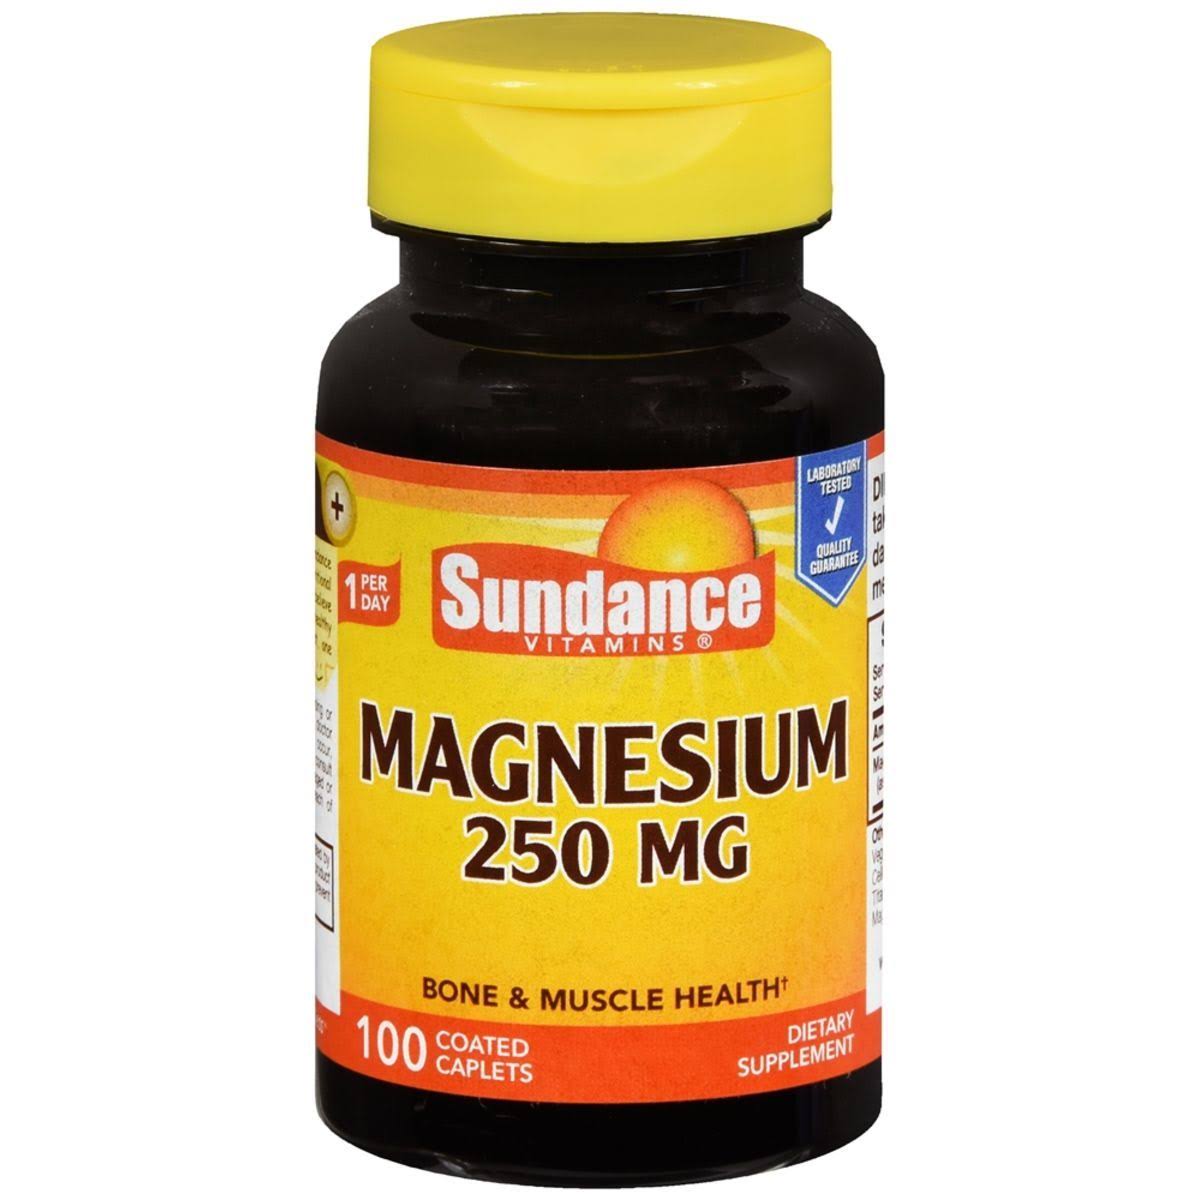 Sundance Bone and Muscle Health Magnesium Tablets - 100ct, 250mg